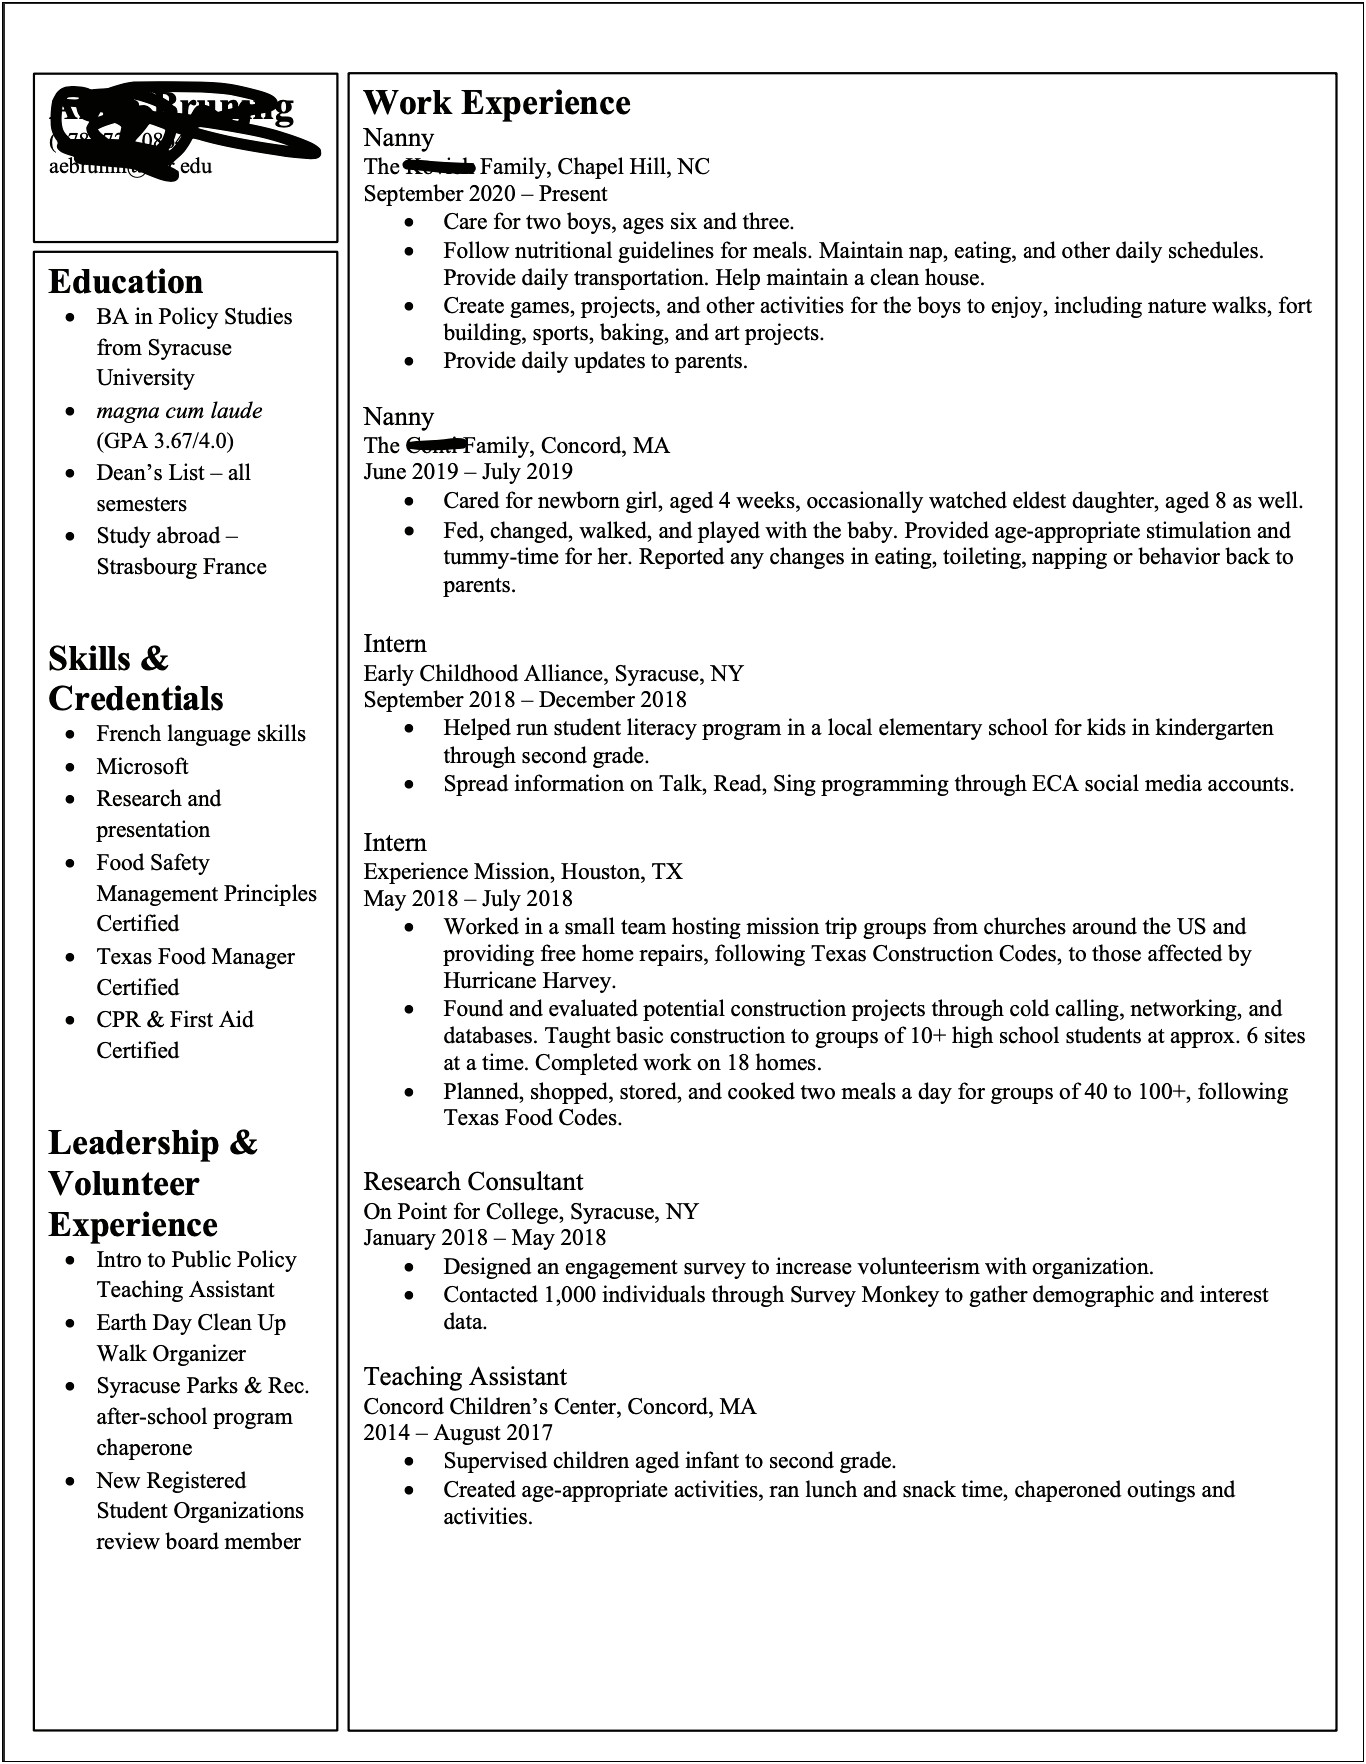 Grading And Surveying Job Description For Resume